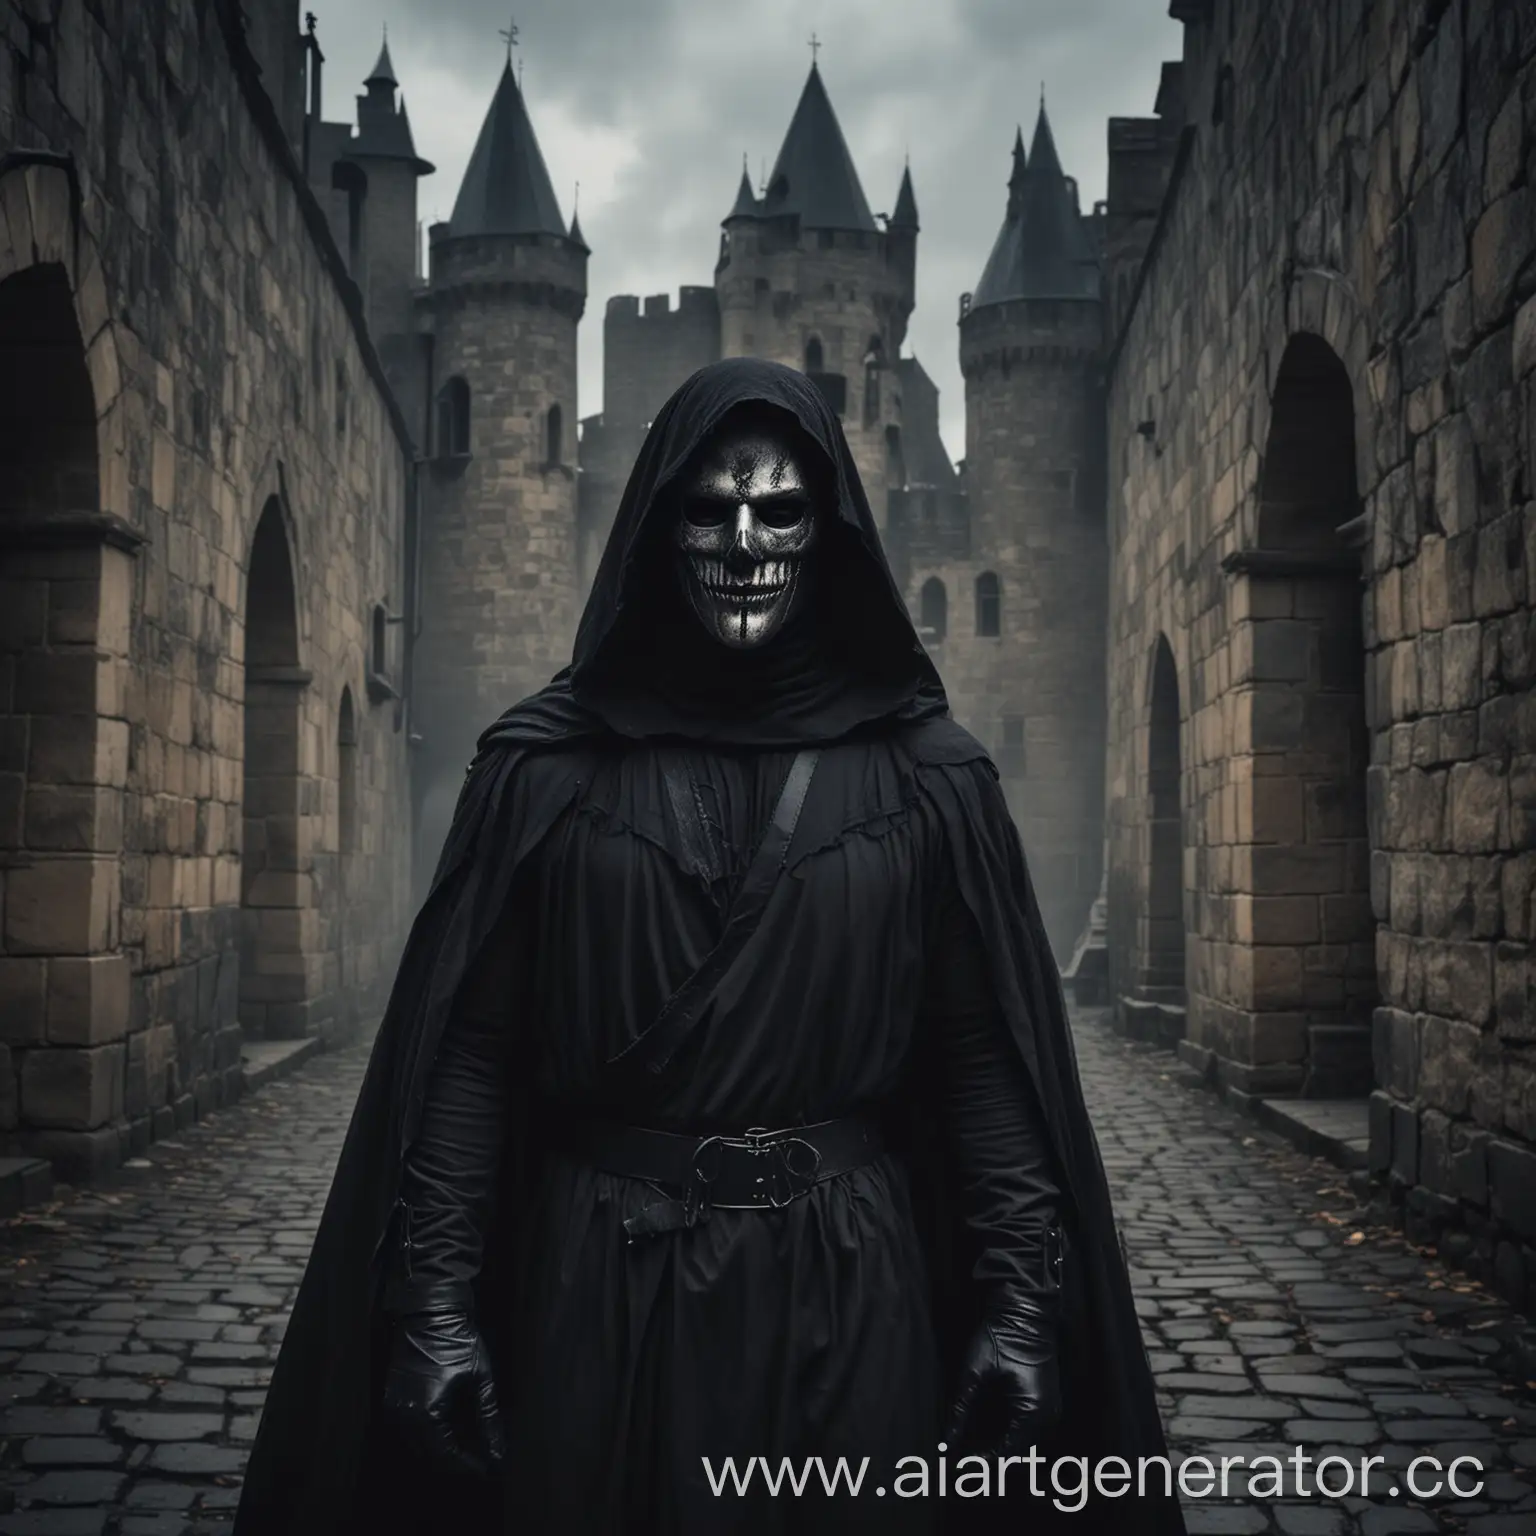 Mysterious-Phantom-in-Dark-Attire-at-Gloomy-Castle